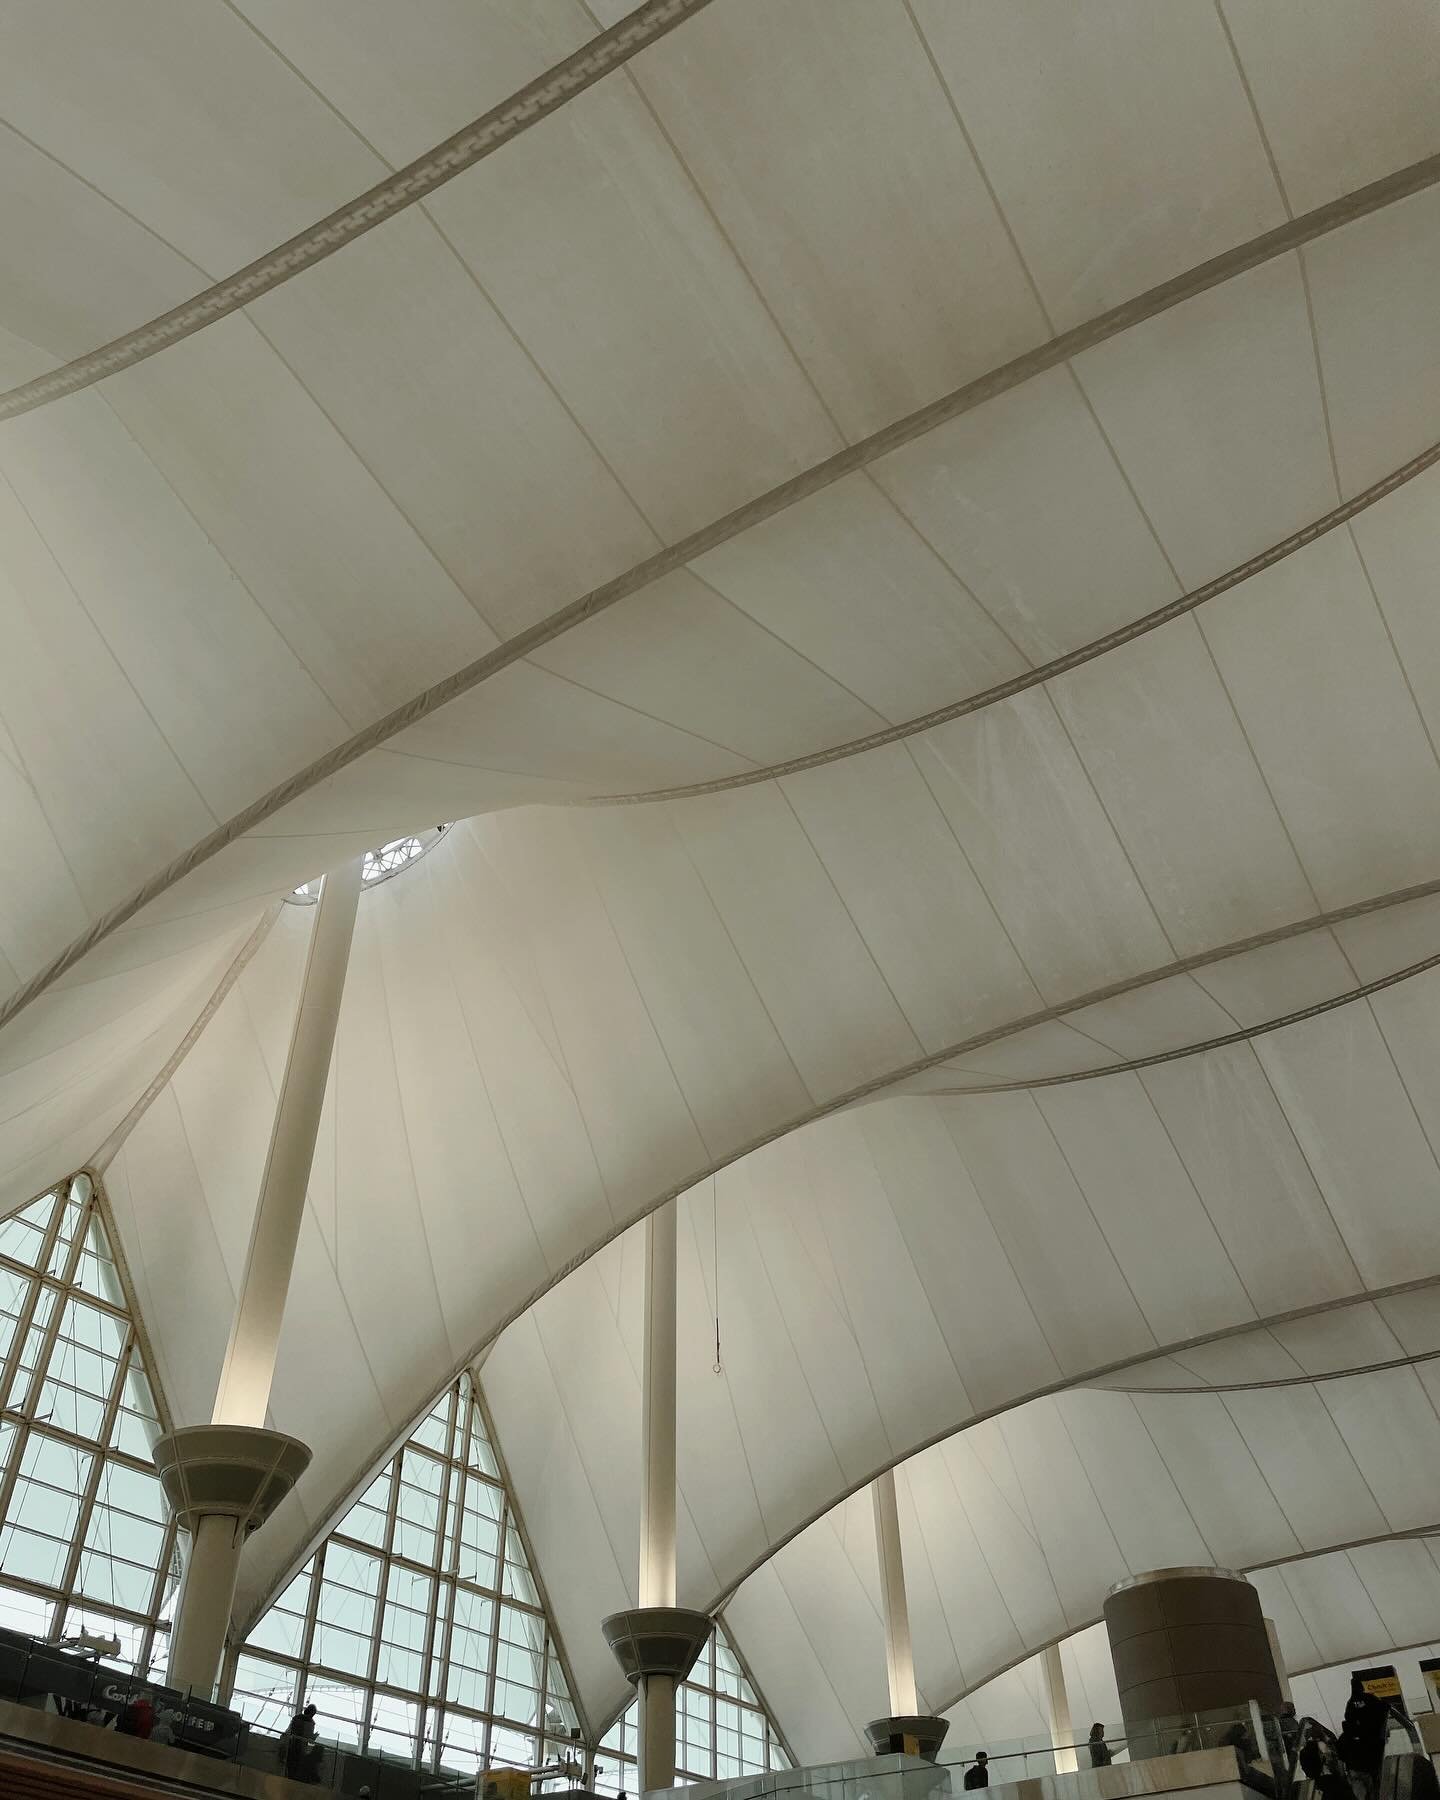 Airport architecture 🤍🛬